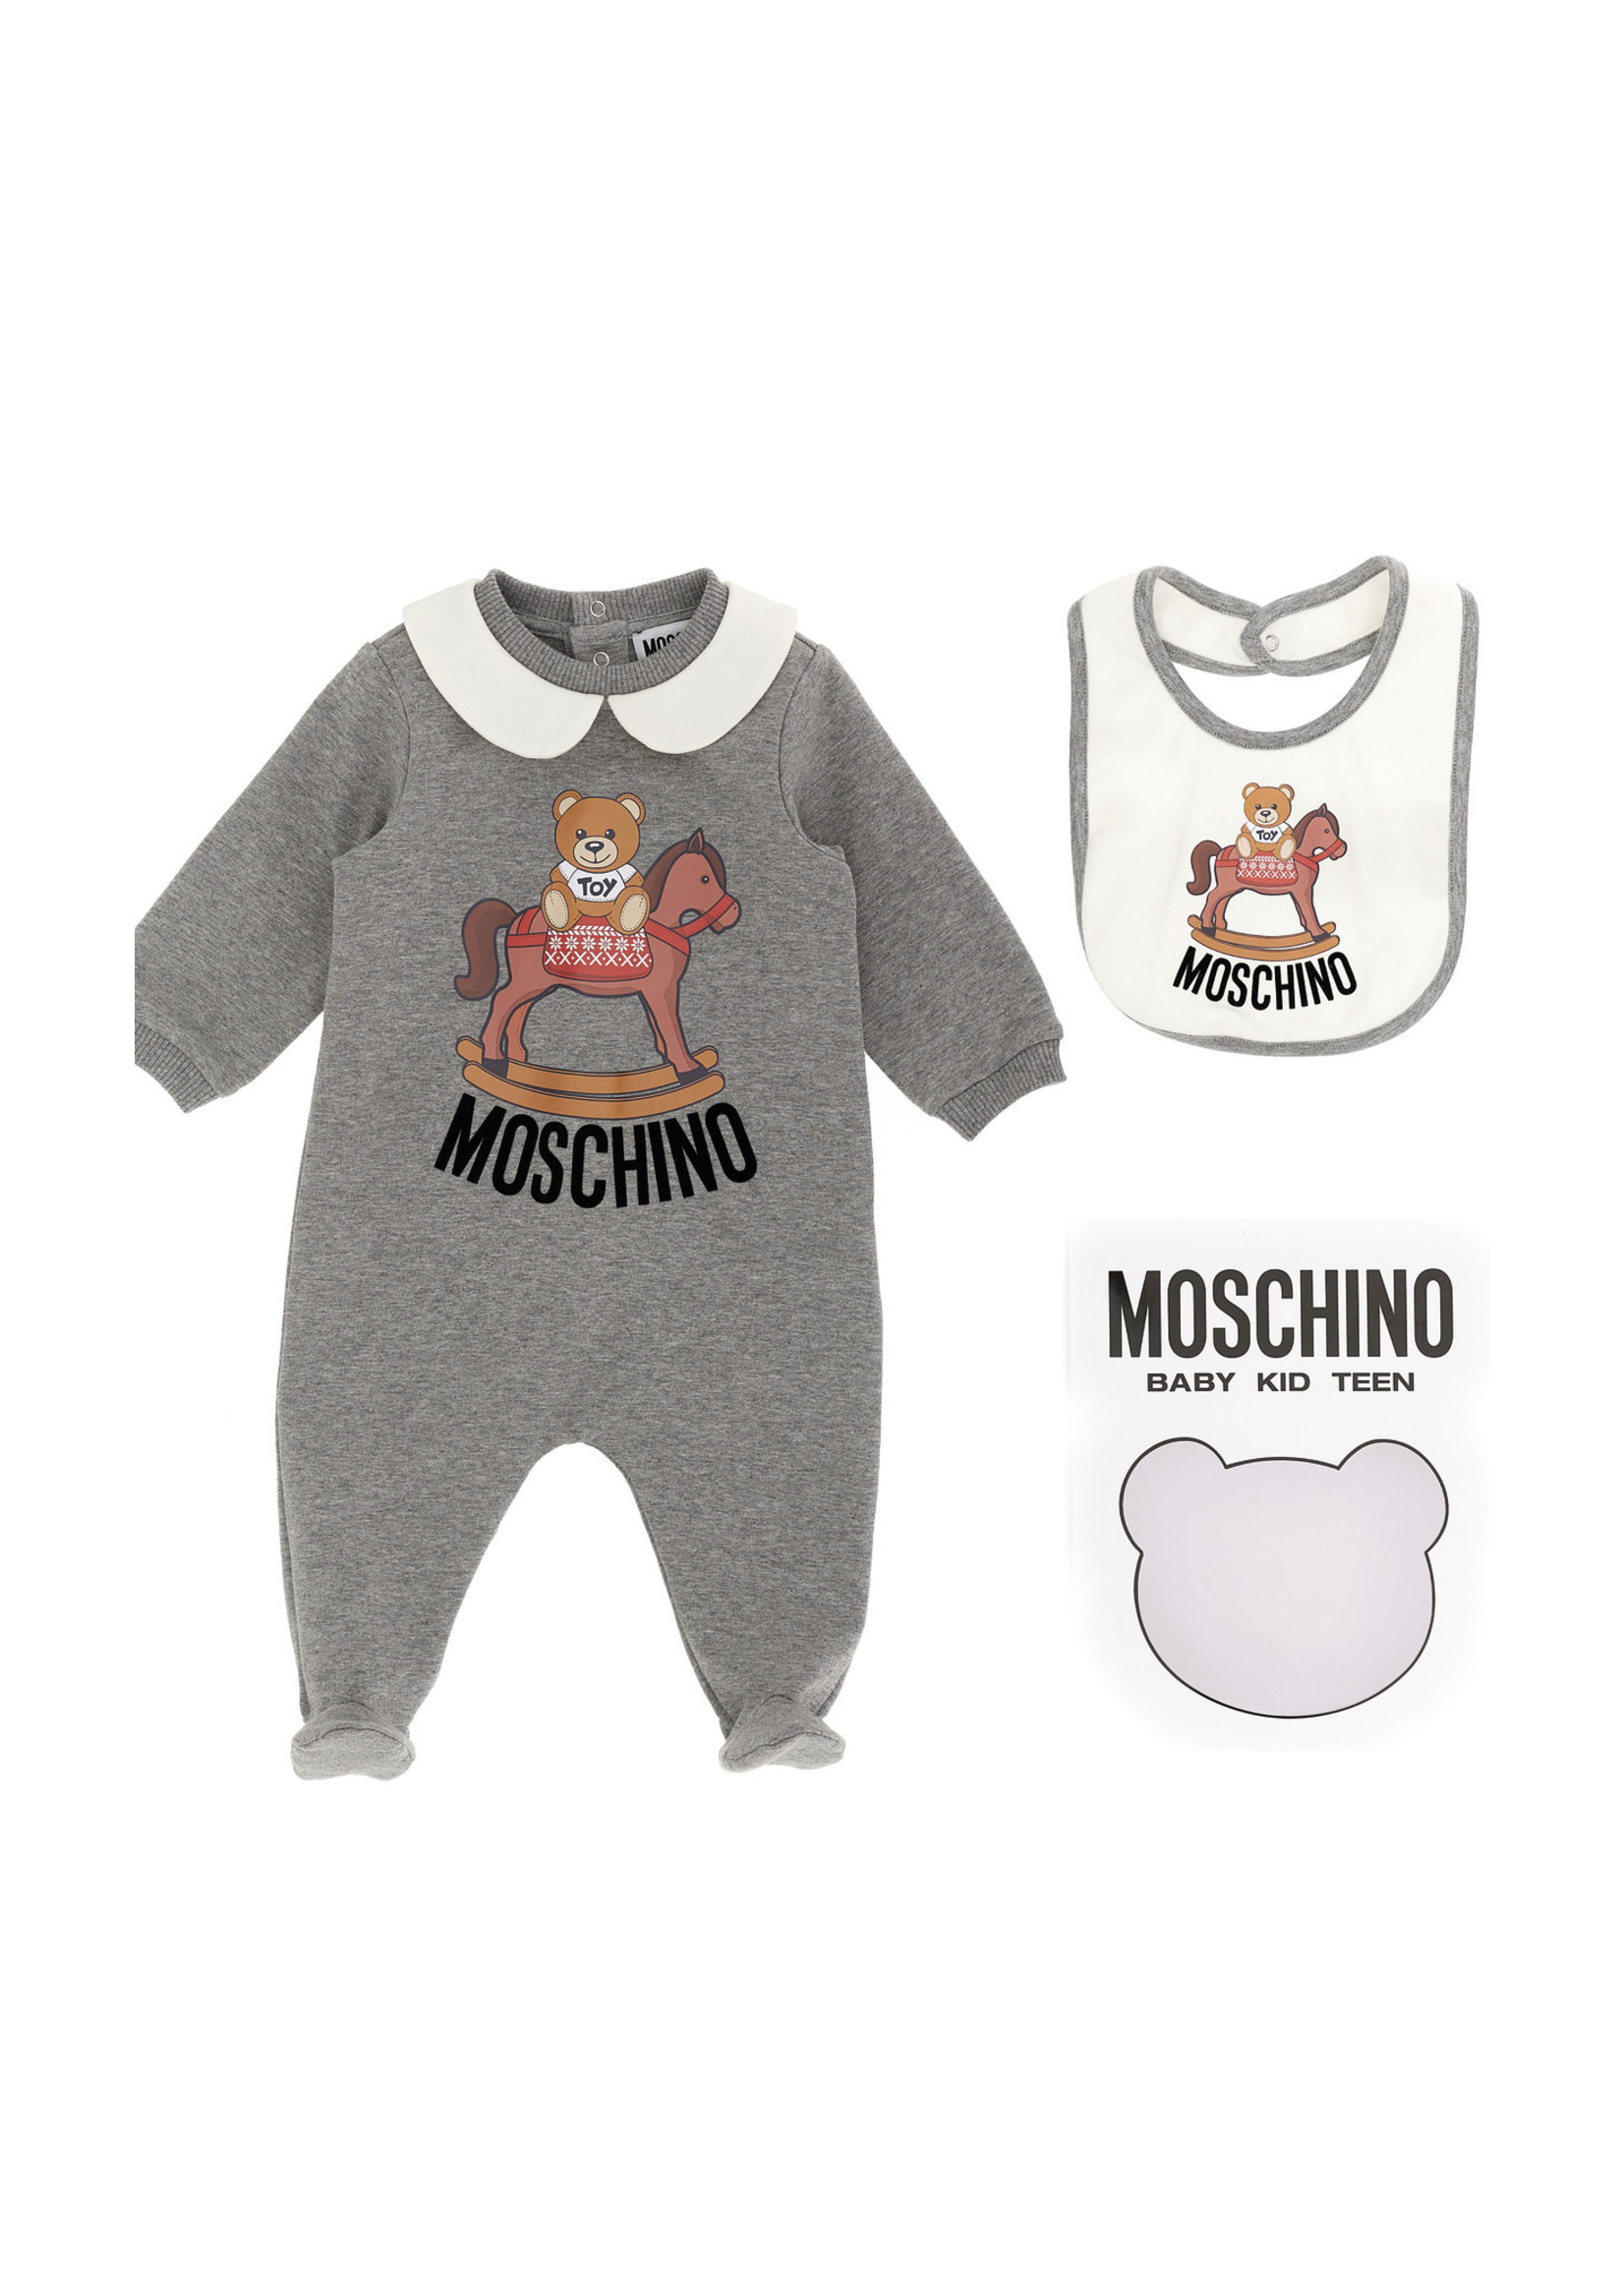 Moschino Moschino Baby Giftset playwear grey toy - MMY02Z